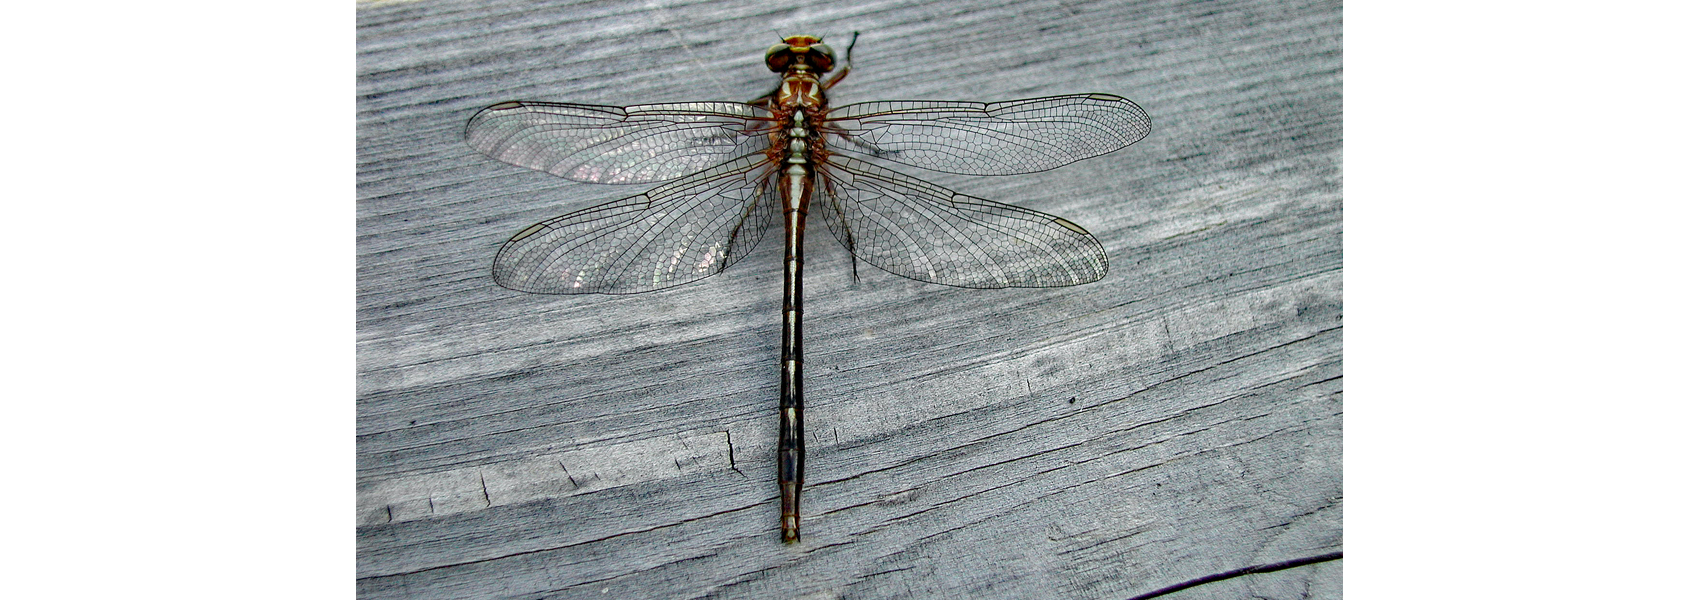 An ashy clubtail dragonfly